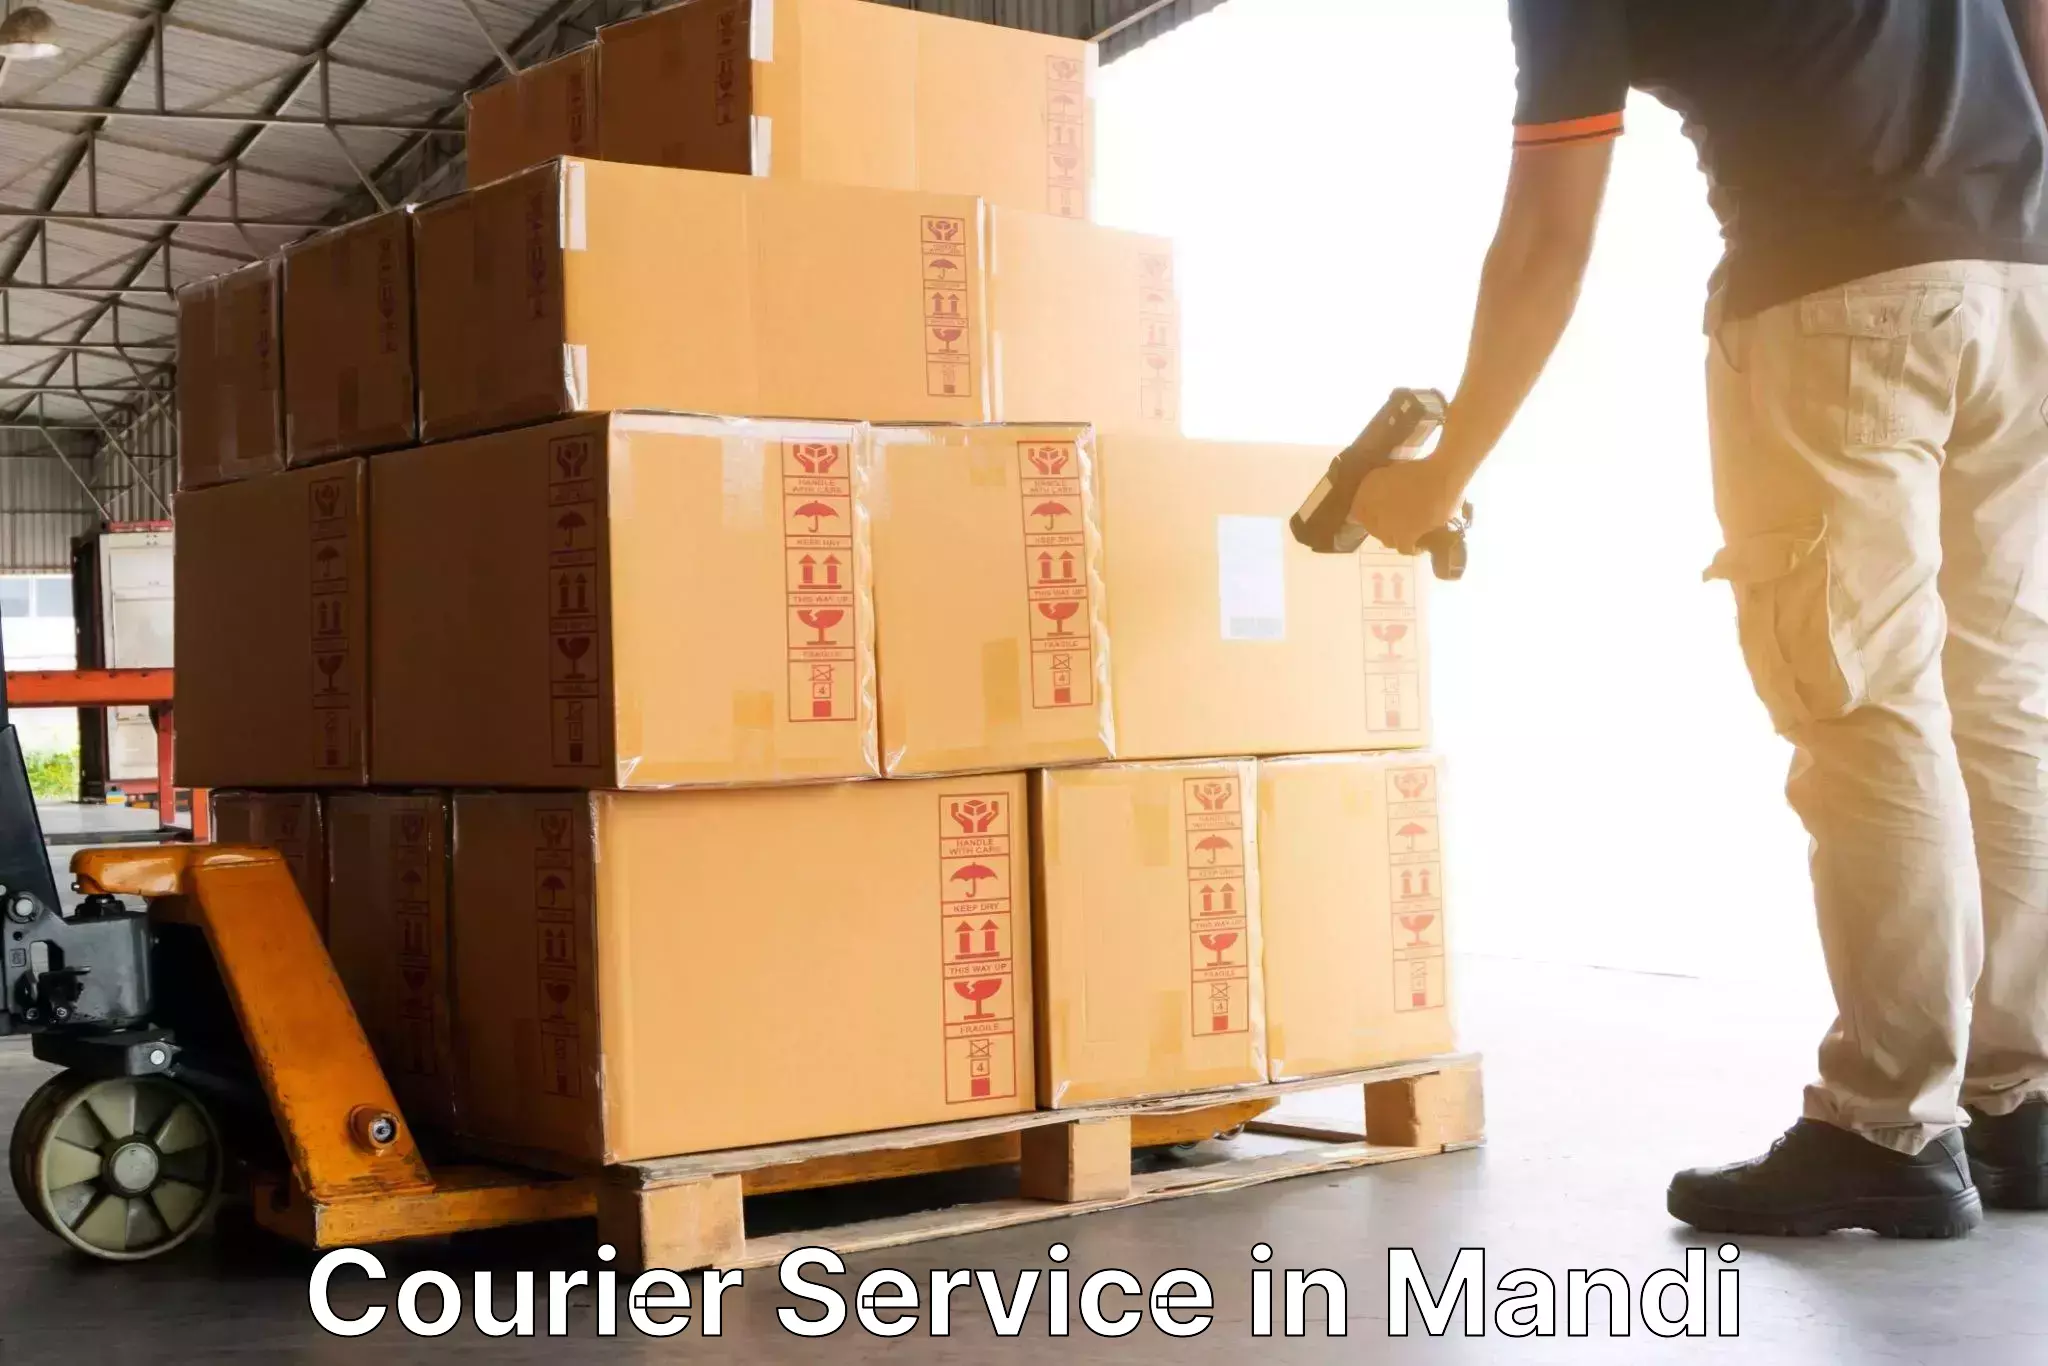 High-capacity shipping options in Mandi